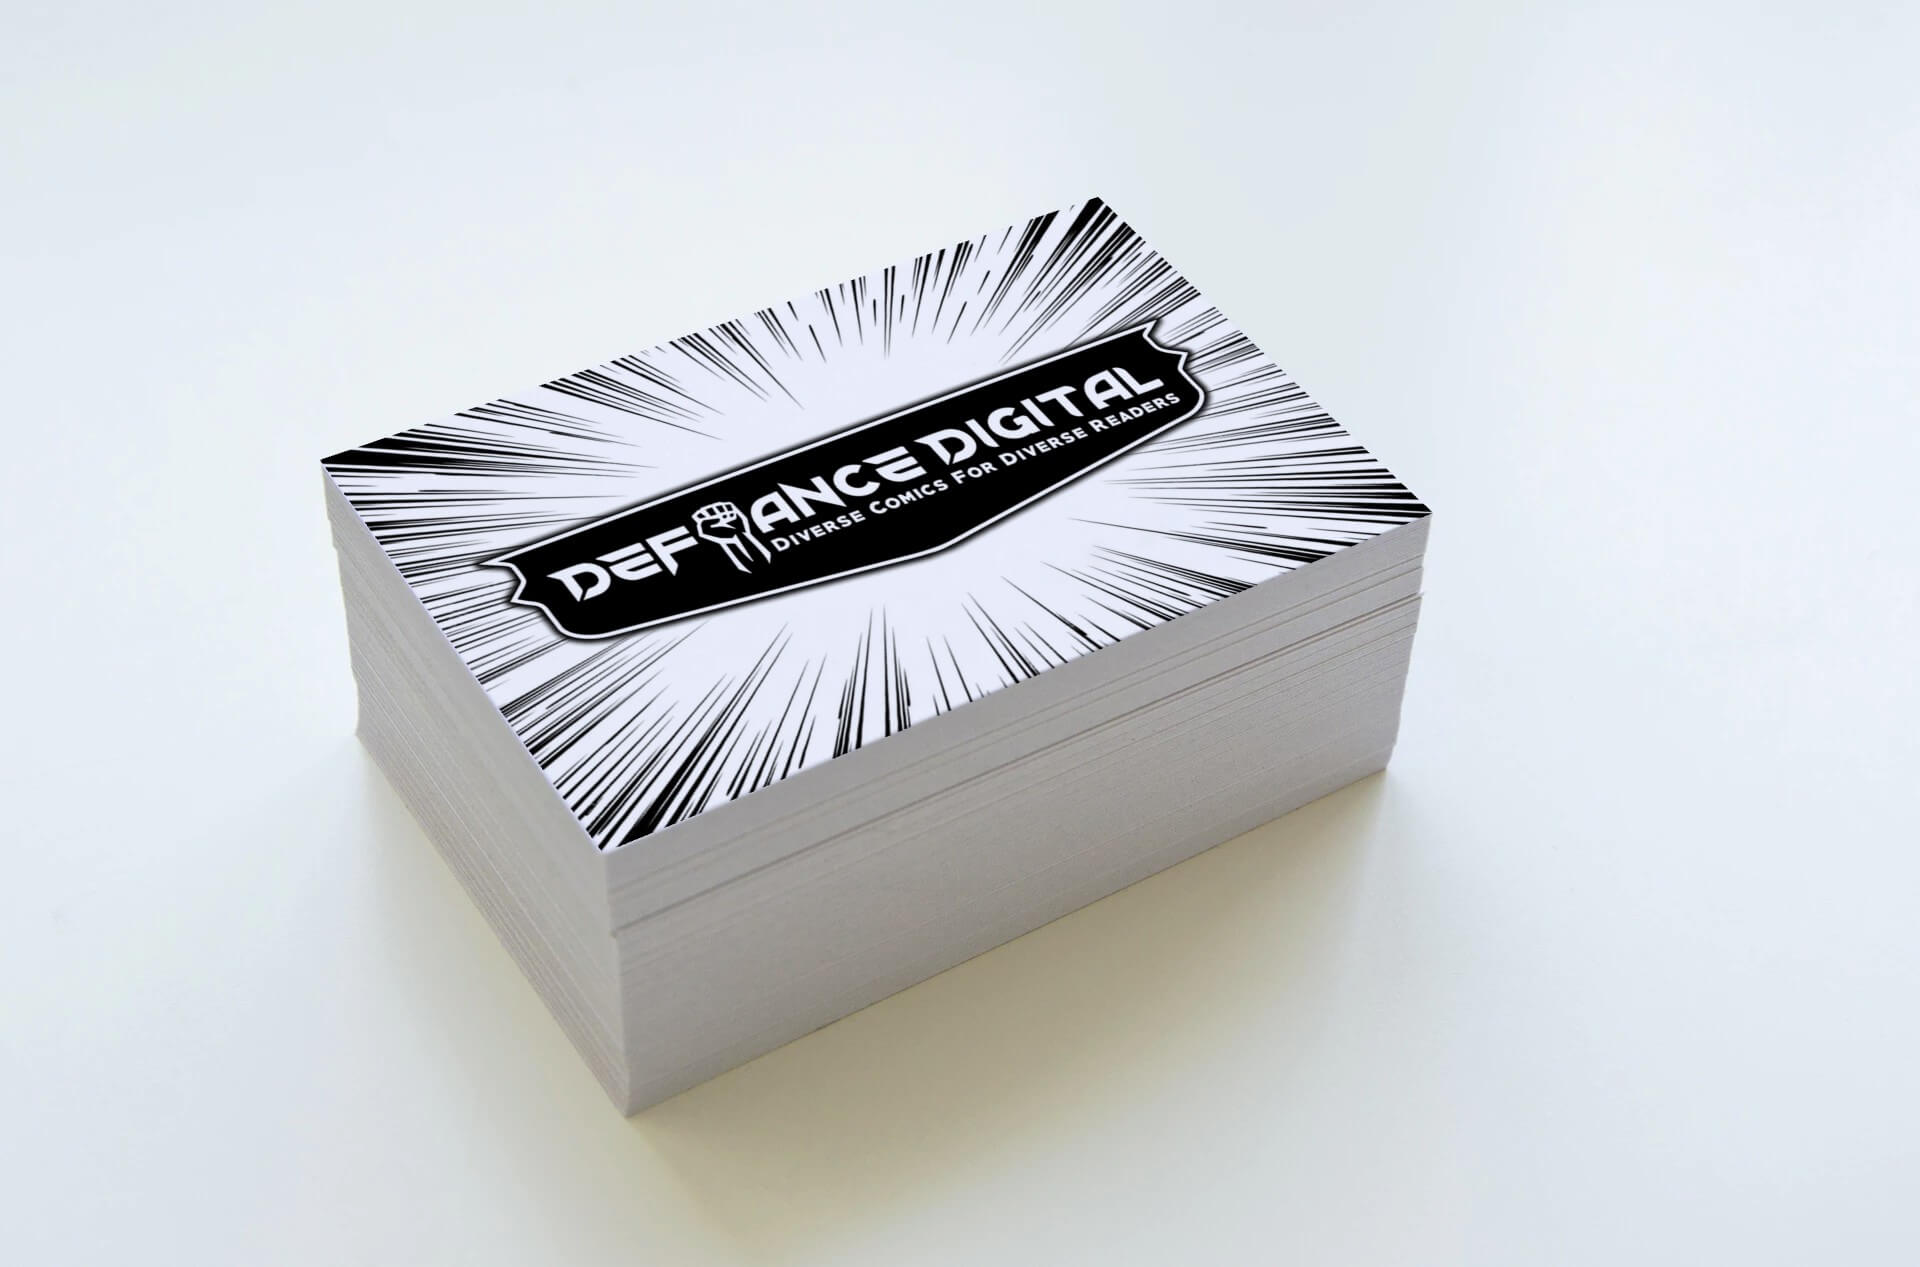 Defiance Digital Studios - Logo Design, Visual Brand Identity Design